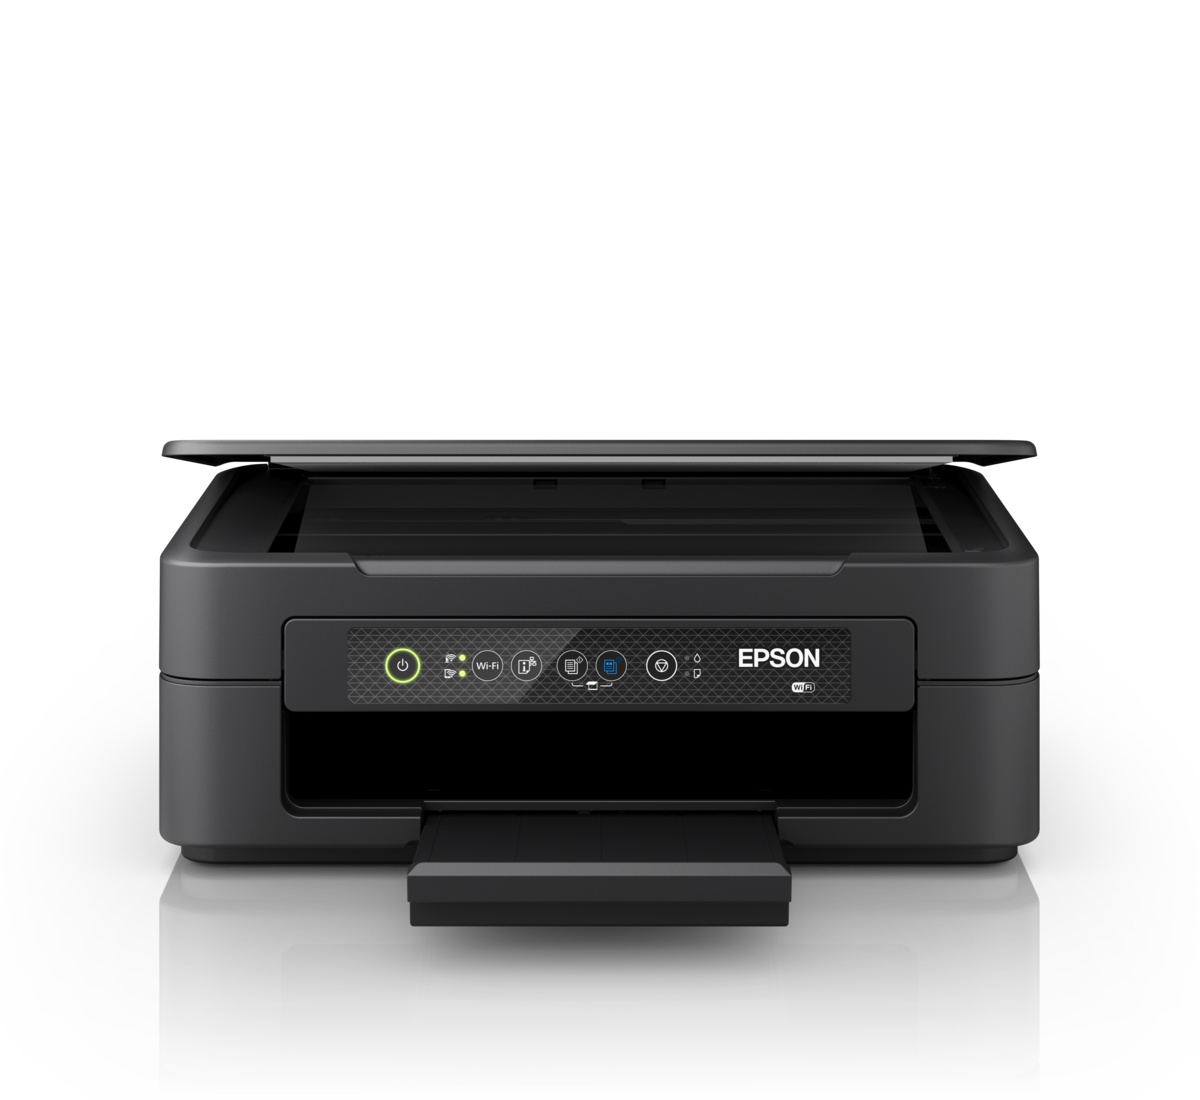 Epson XP-2200 Manuals - Free viewing - Print Service